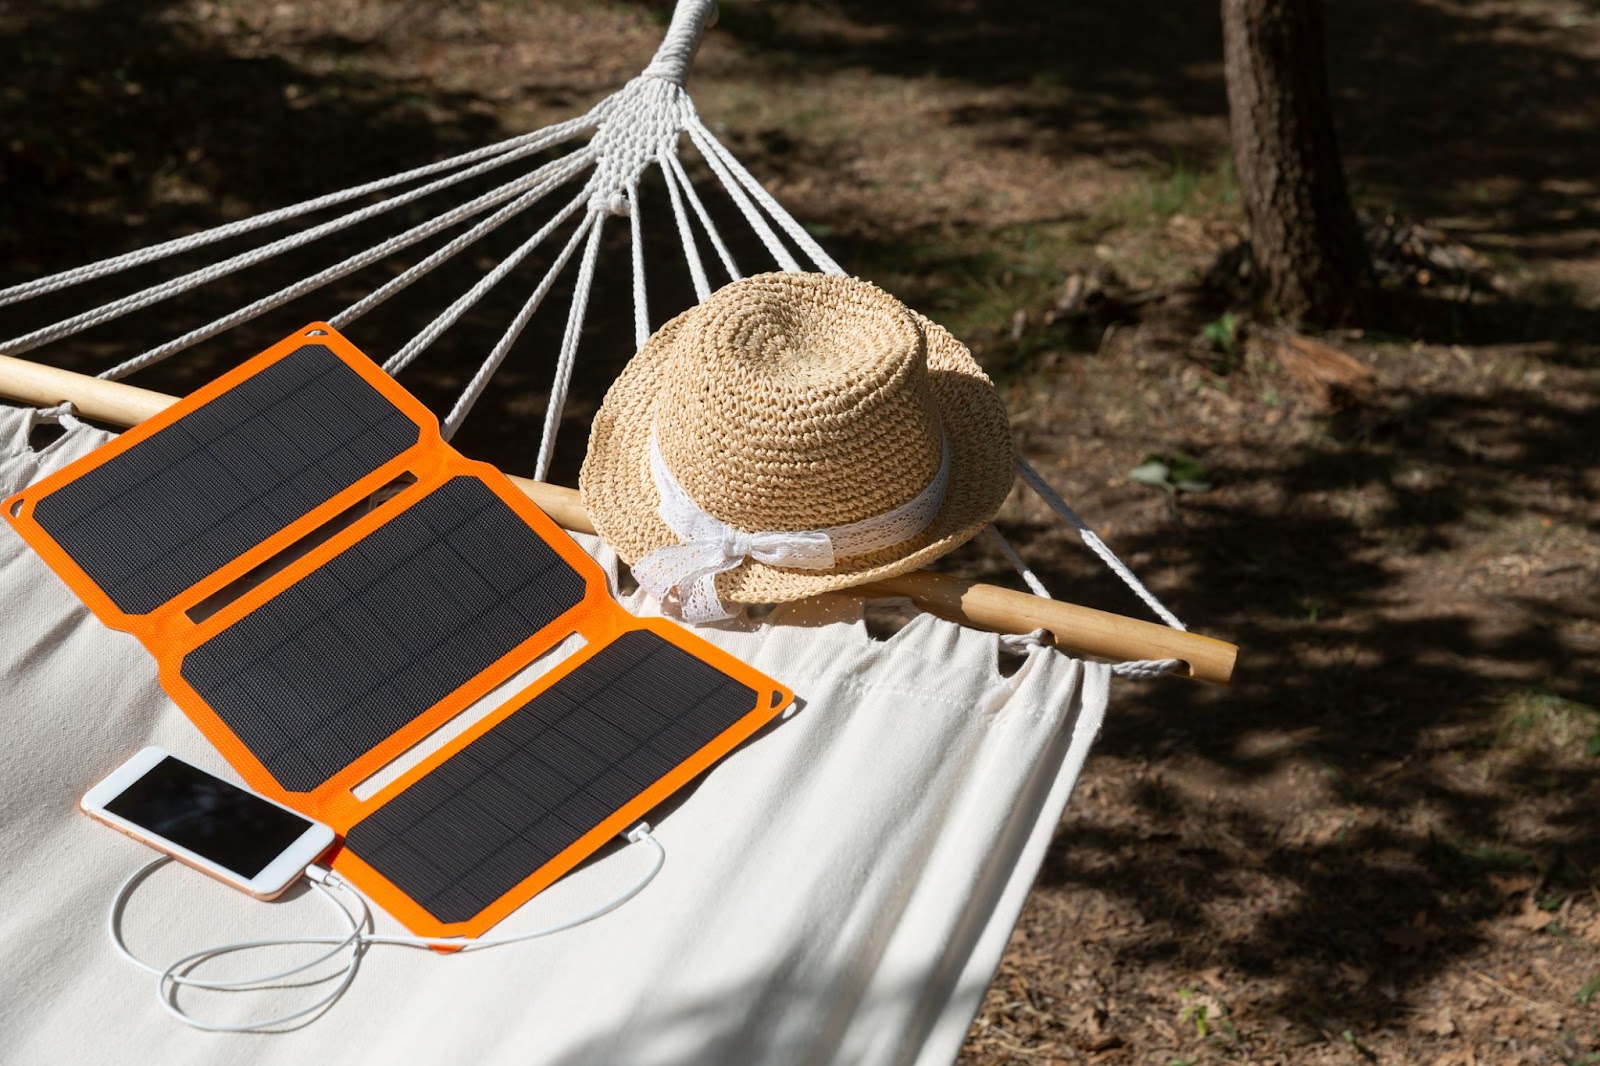 Portable solar panels laying on a hammock